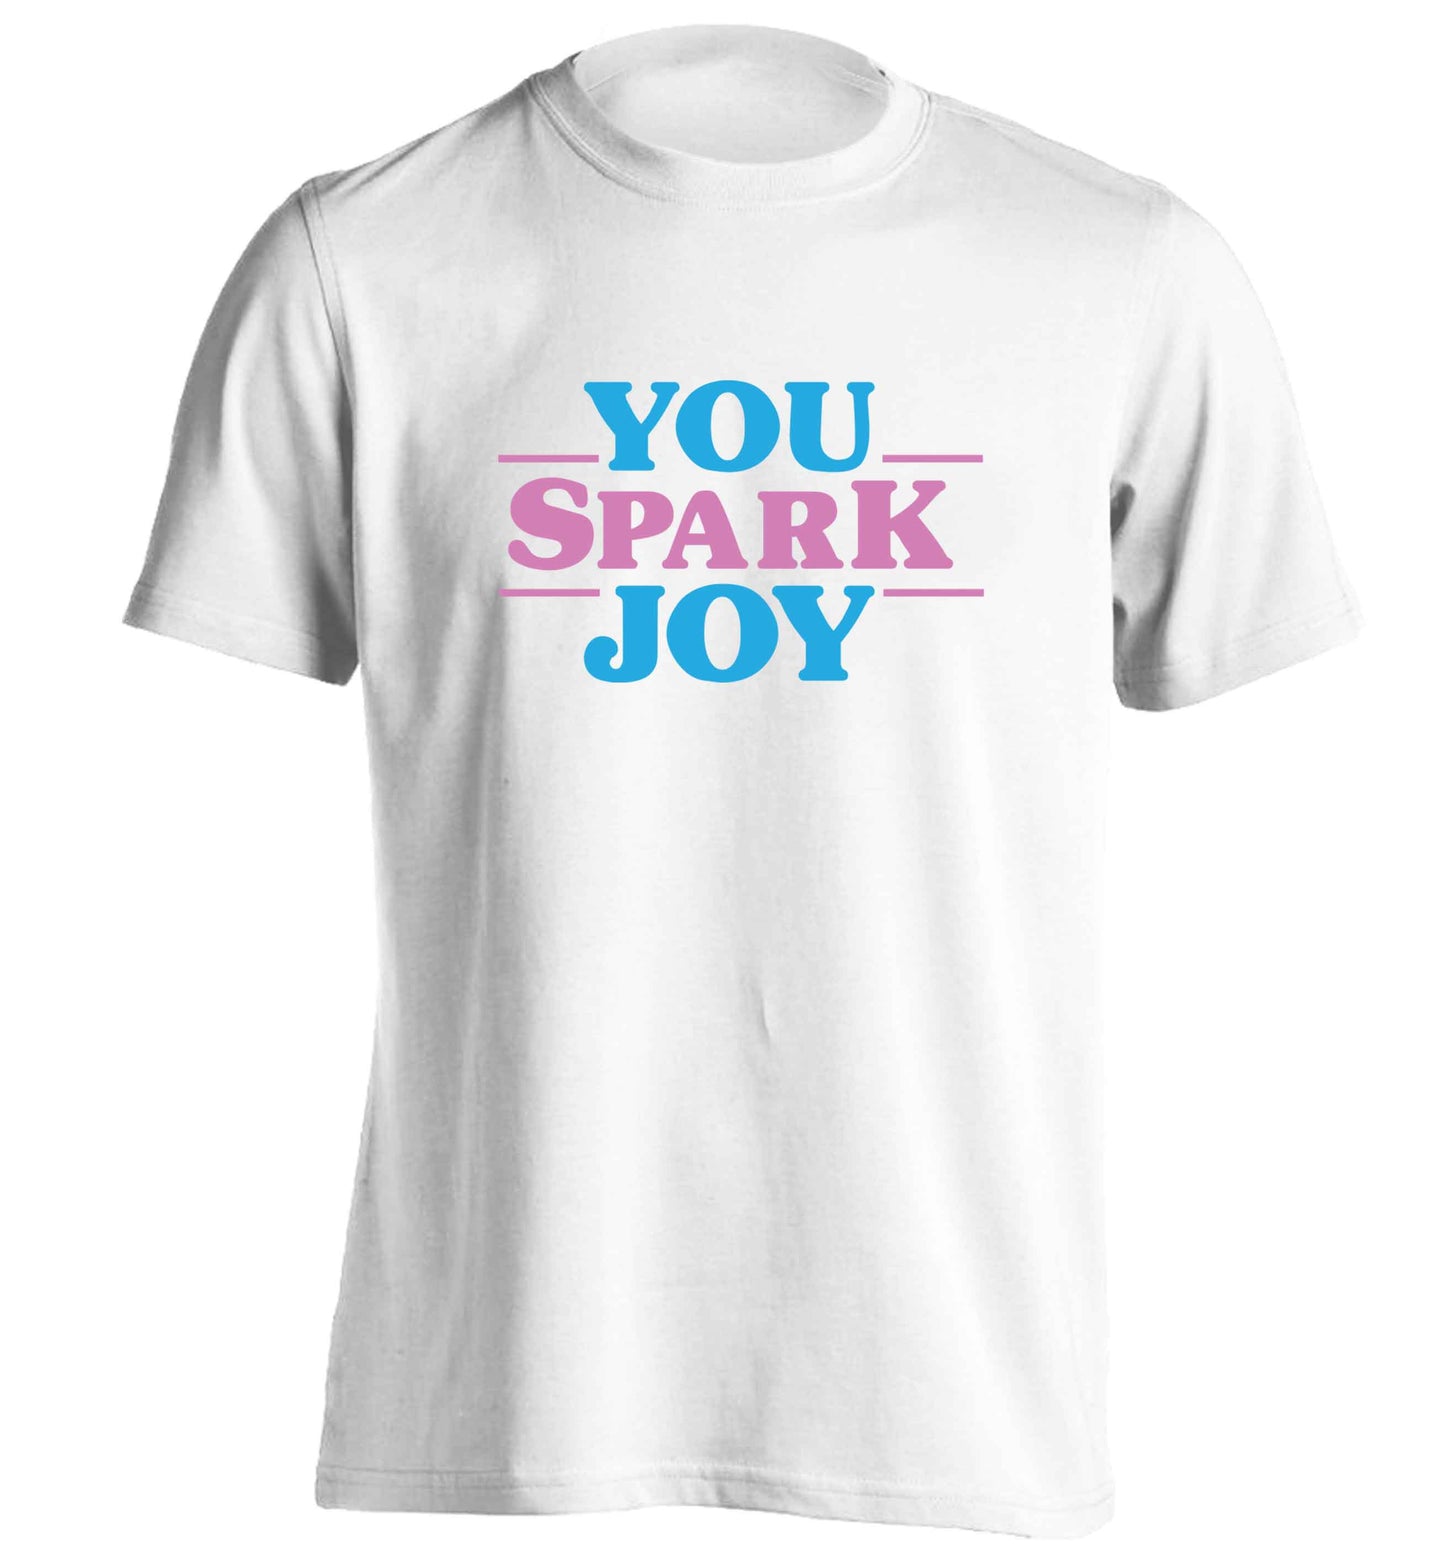 You spark joy adults unisex white Tshirt 2XL